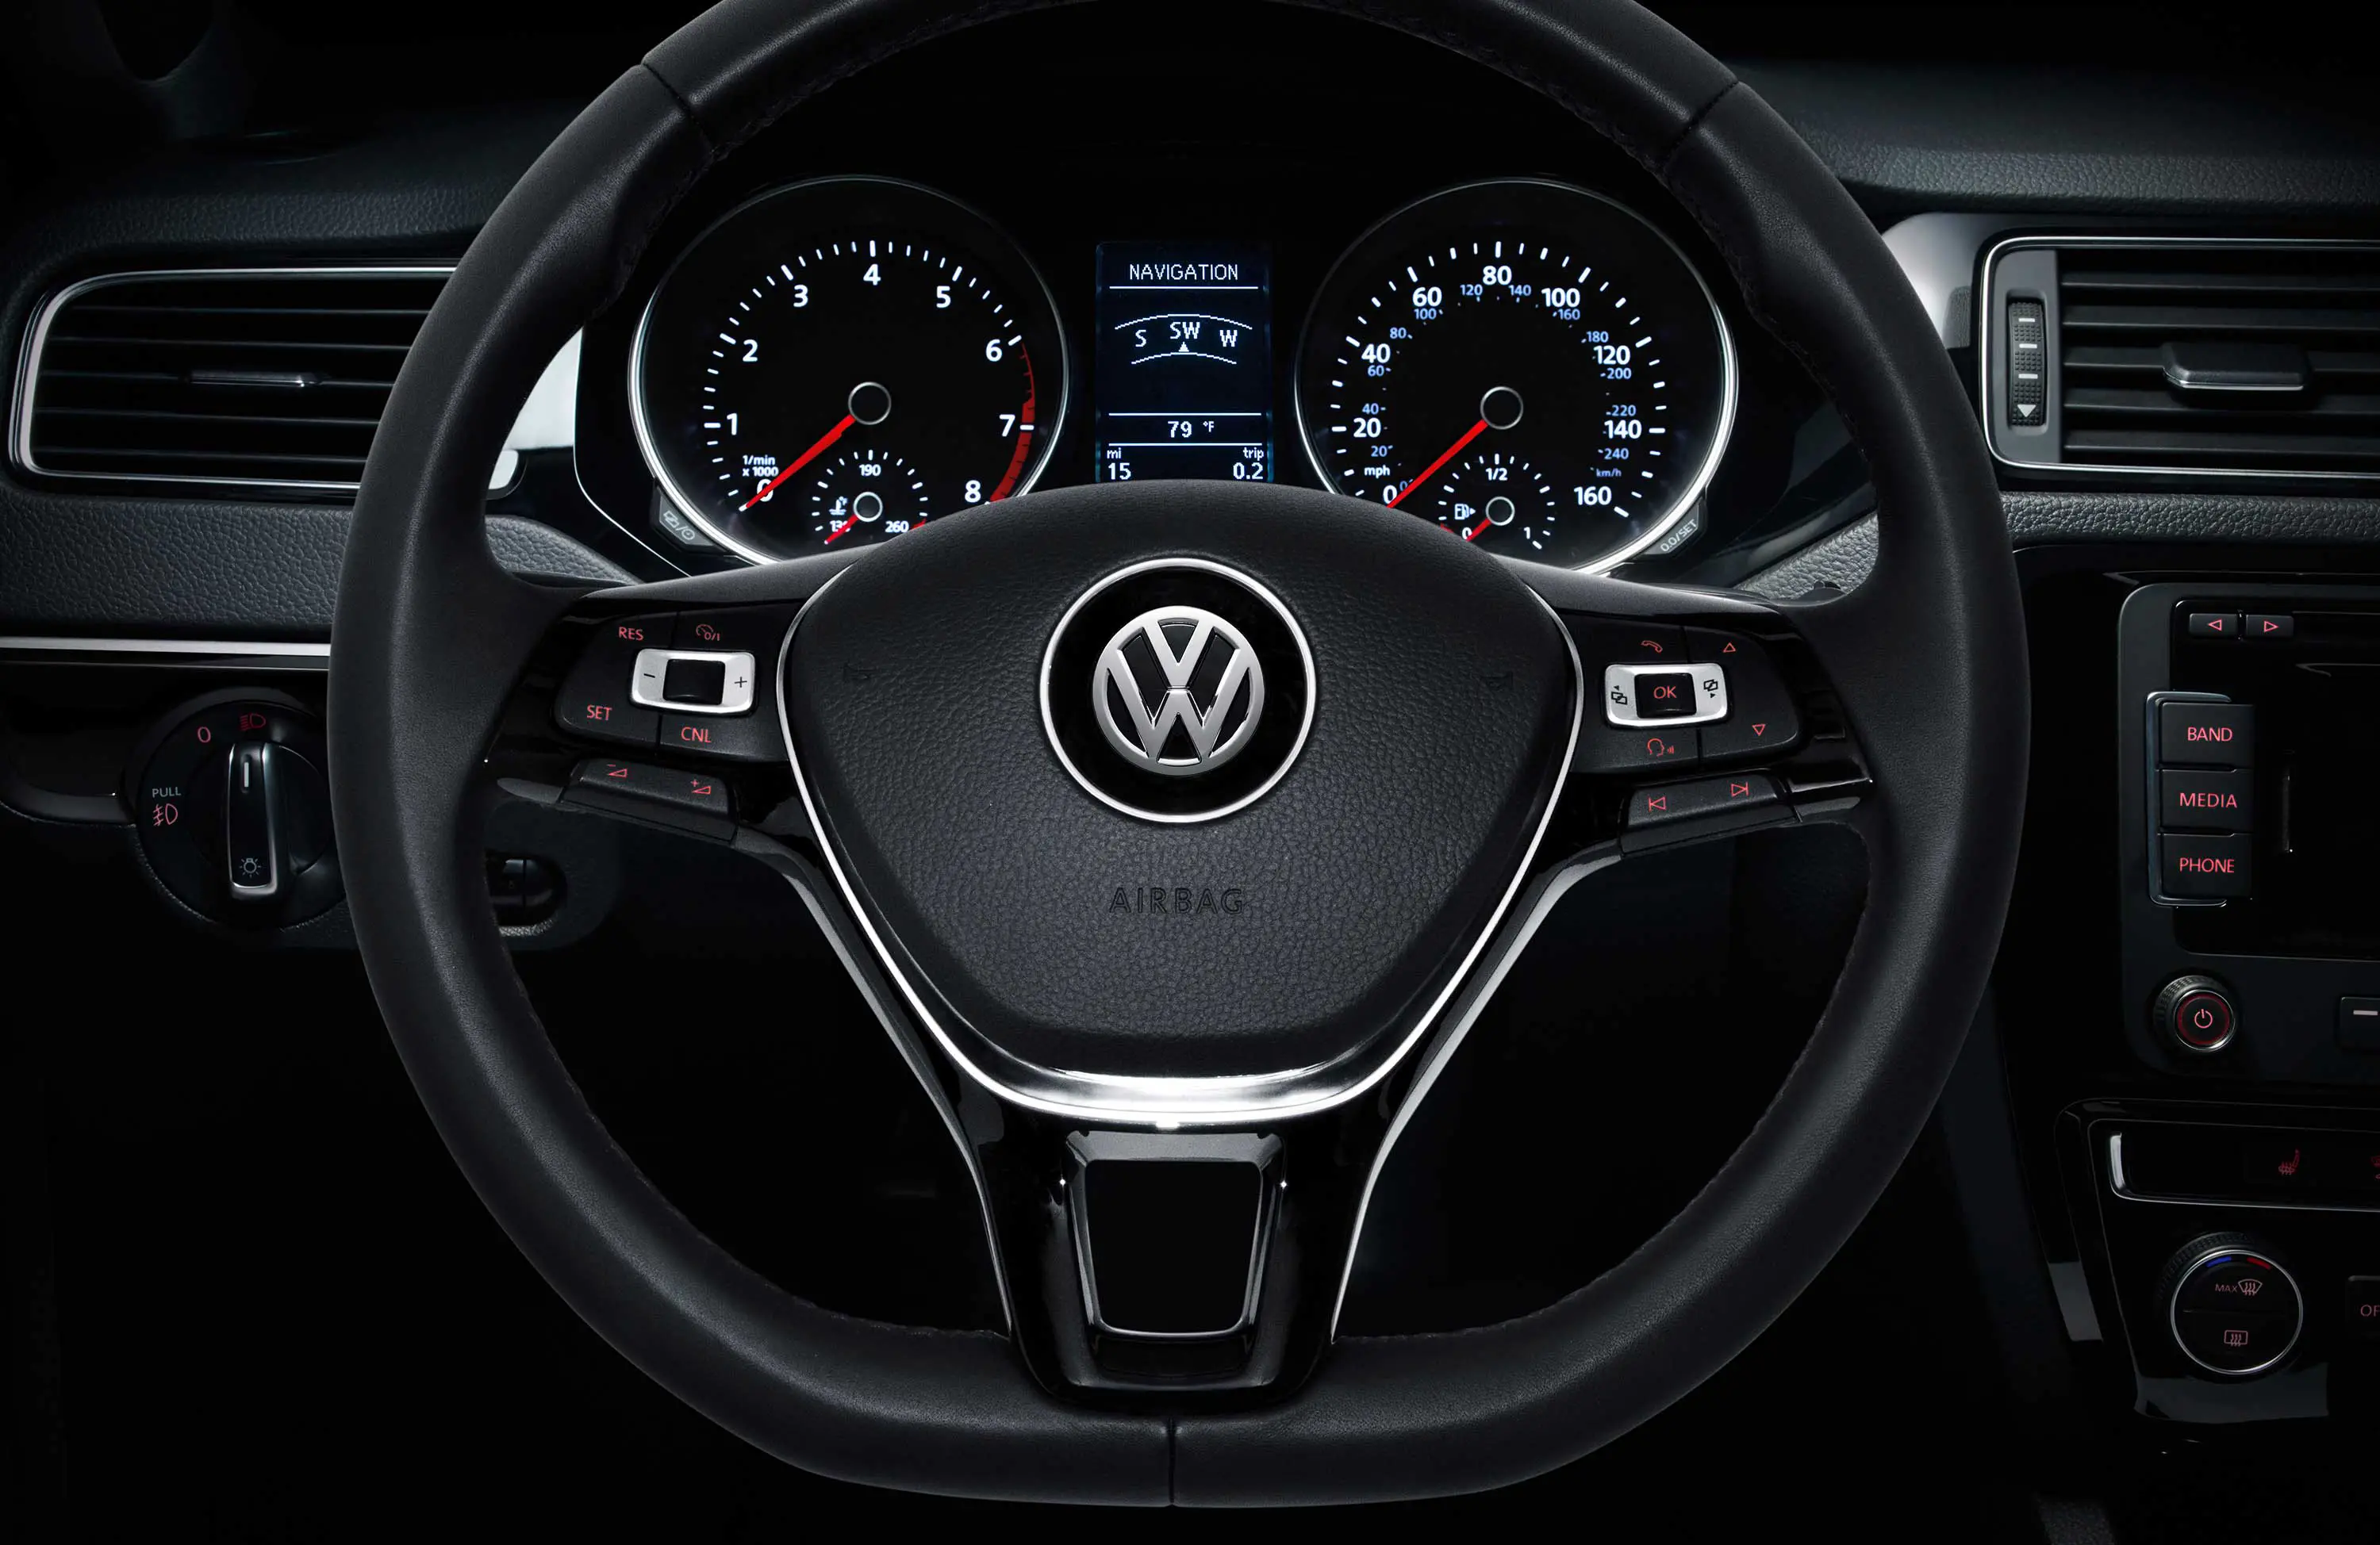 Volkswagen Jetta 1.4 TSI Trendline Interior